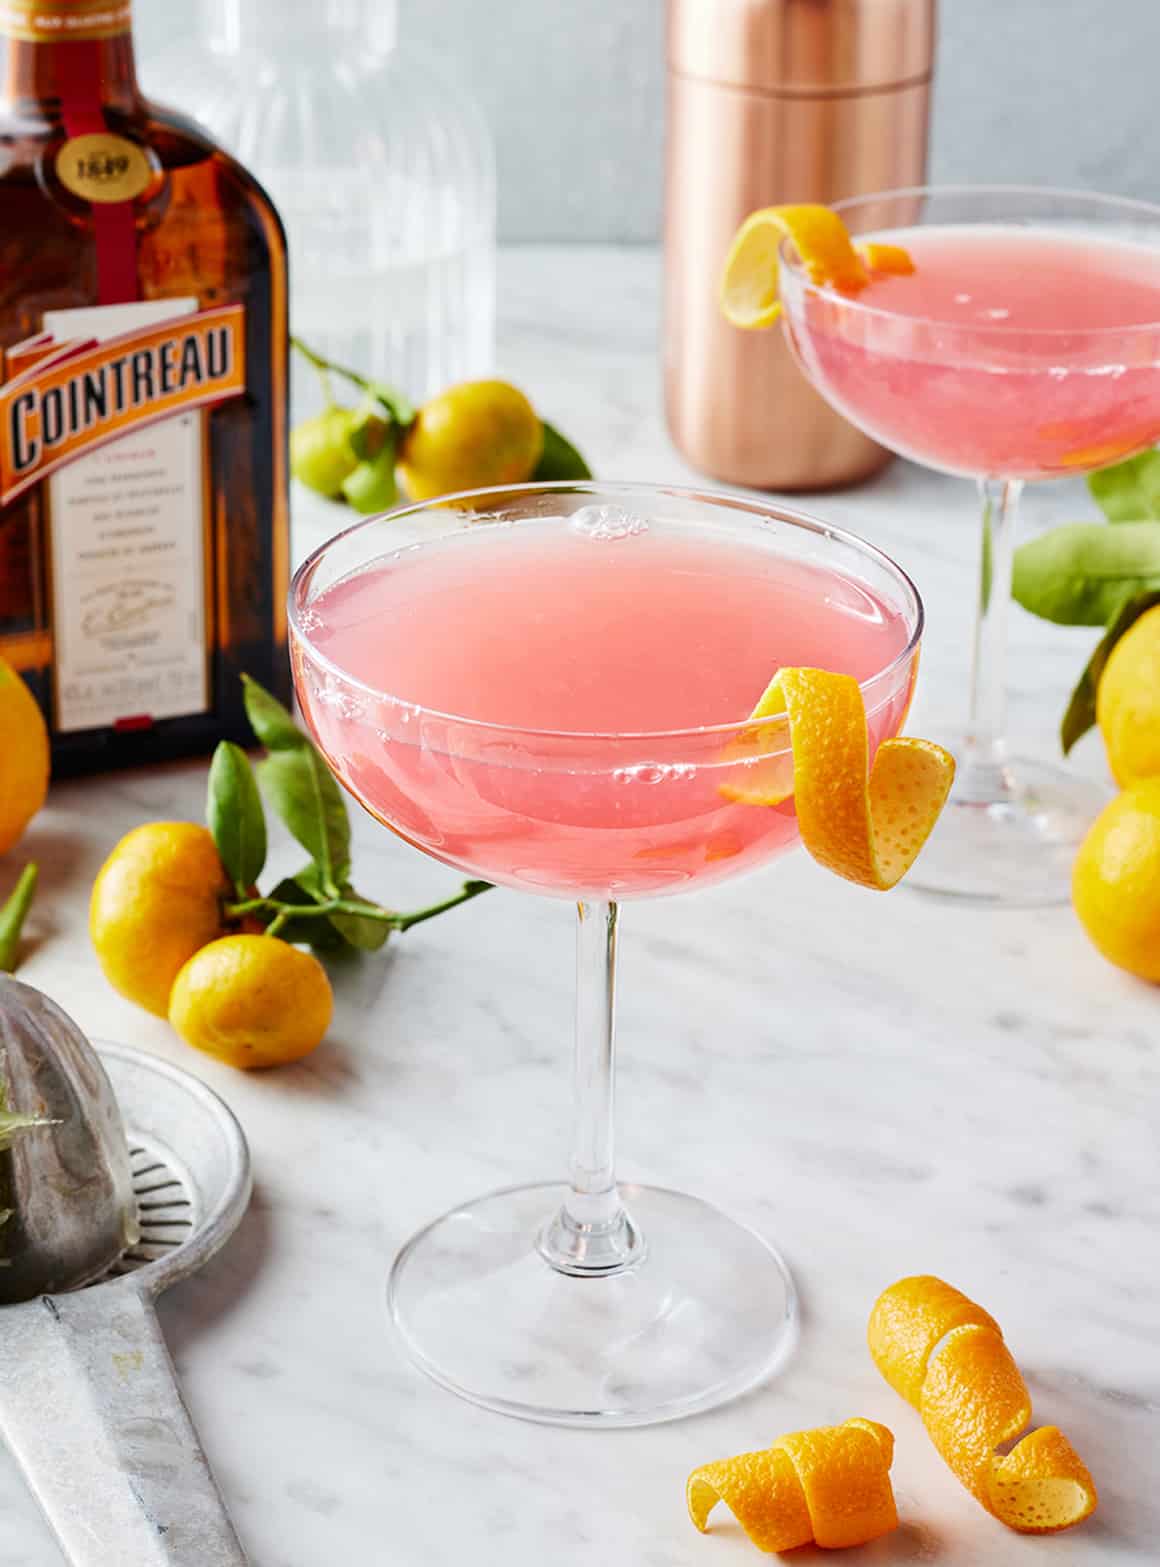 Cosmopolitan cocktail